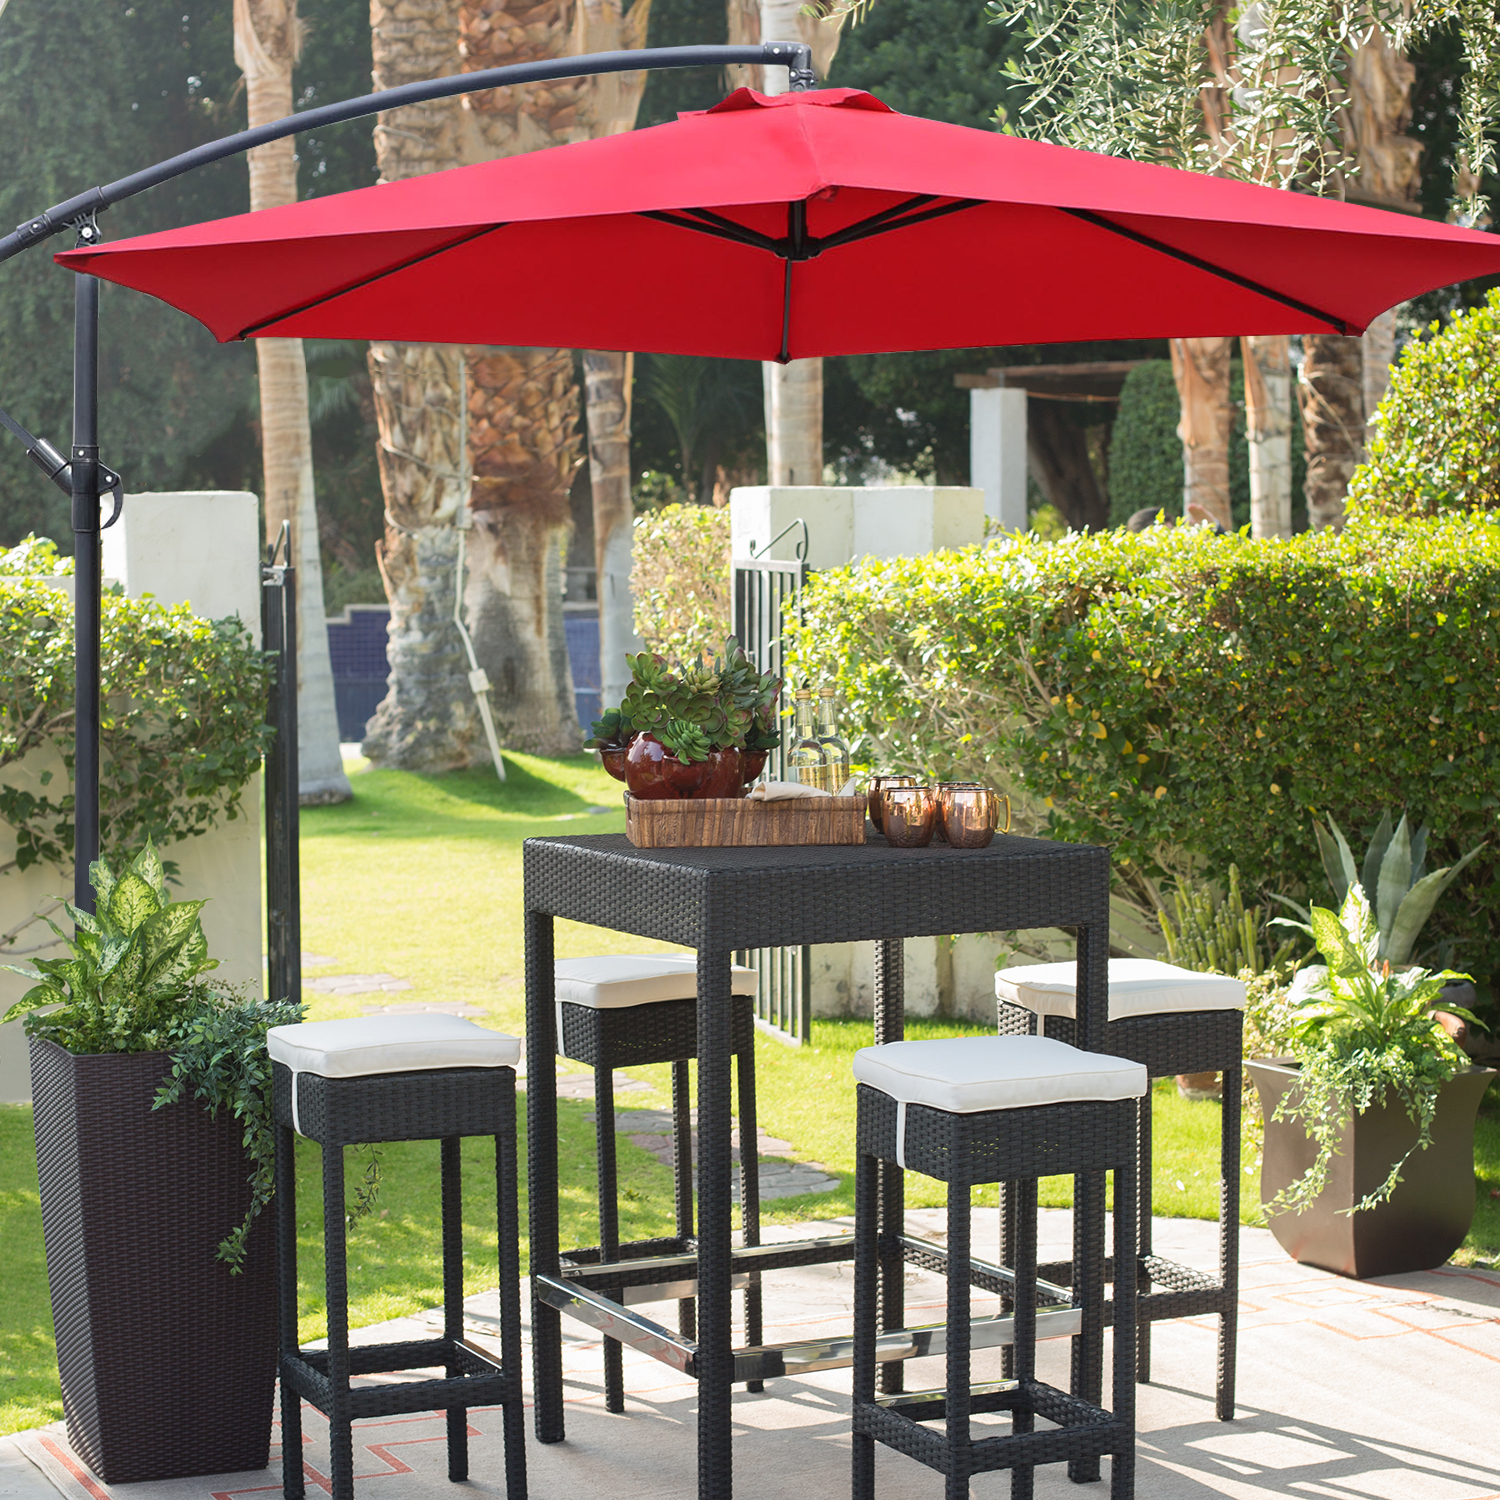 Uplion Outdoor patio umbrella with Blue tooth speaker garden umbrella with light